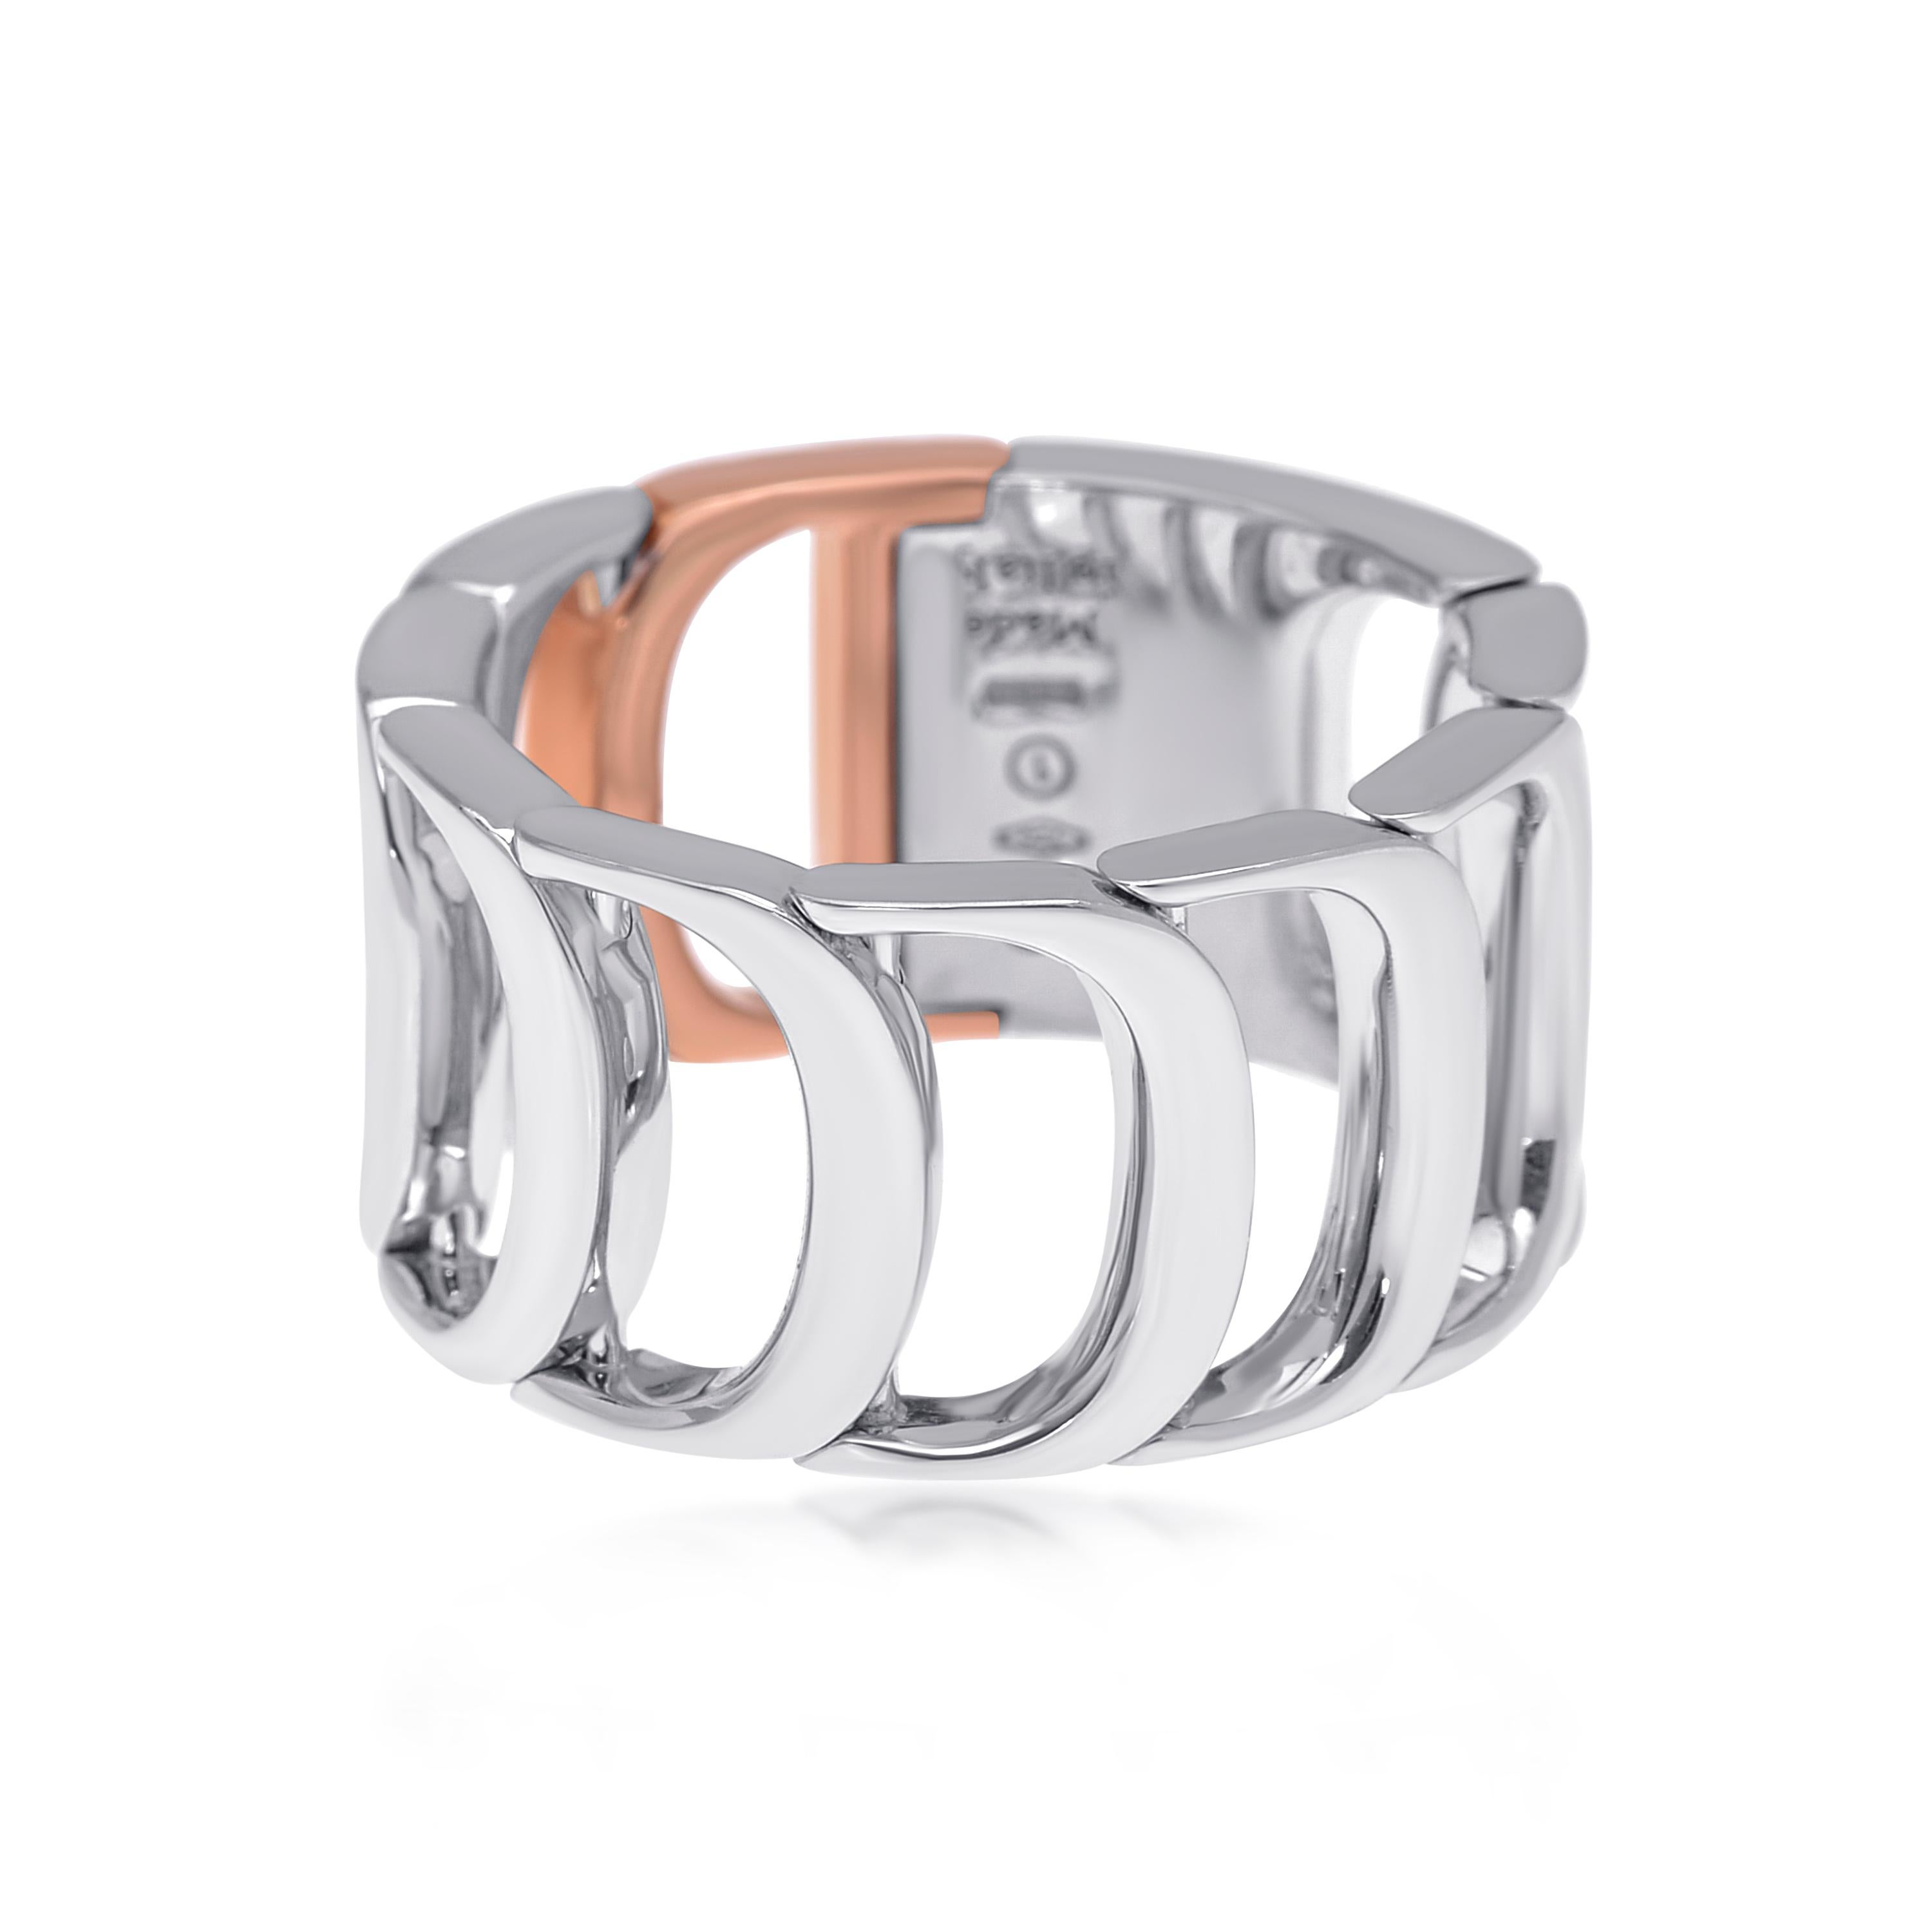 Contemporary Damiani Damianissima 18K White & Rose Gold Diamond Ring sz 6.75 For Sale